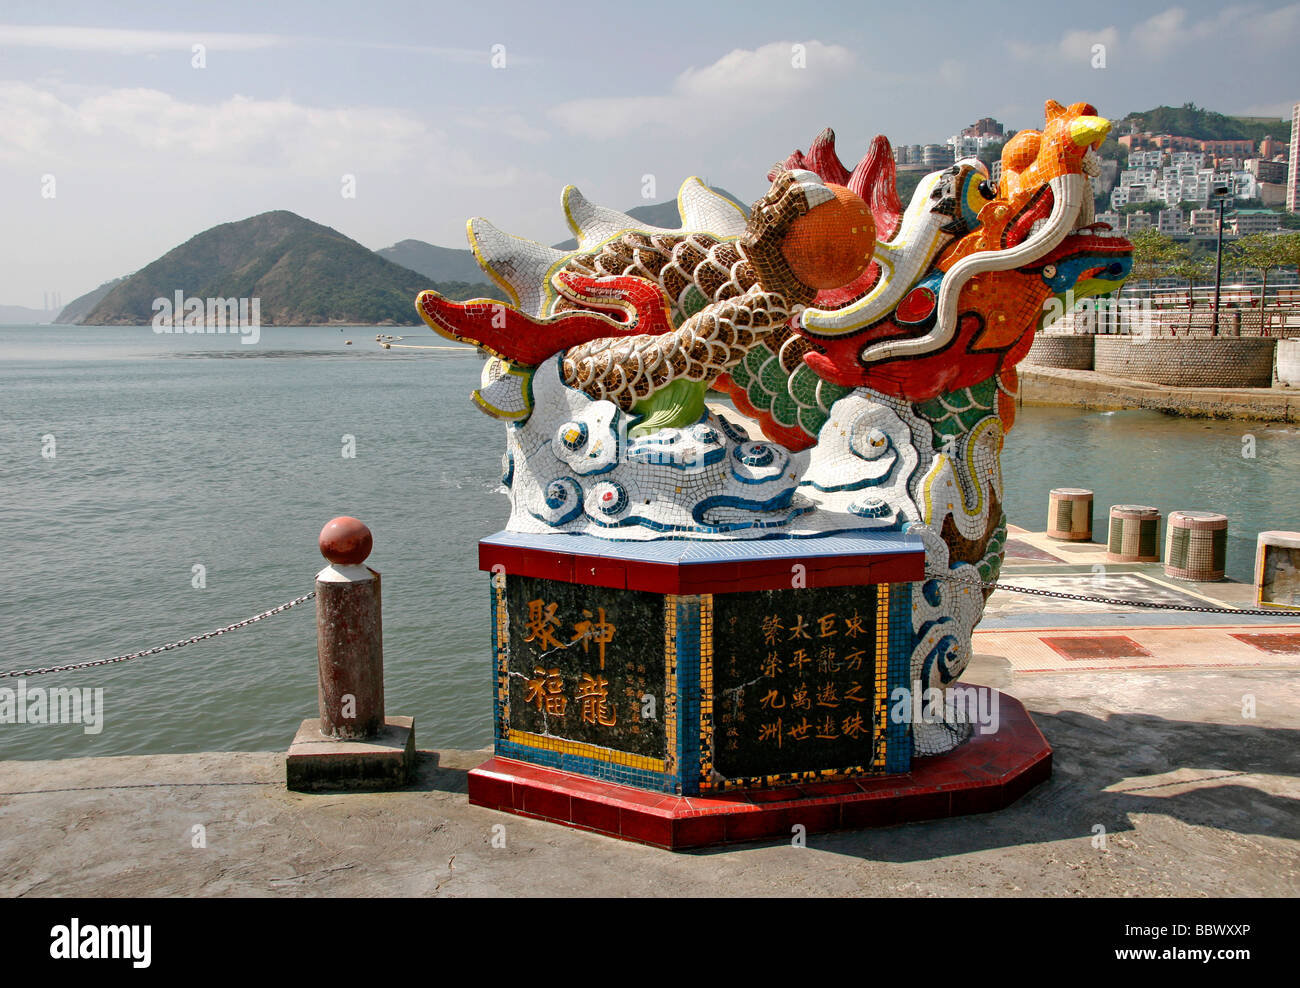 Statue mit symbolischen chinesische Bilder, Park, Repulse Bay, Seaside Resort, Hong Kong, China, Asien Stockfoto